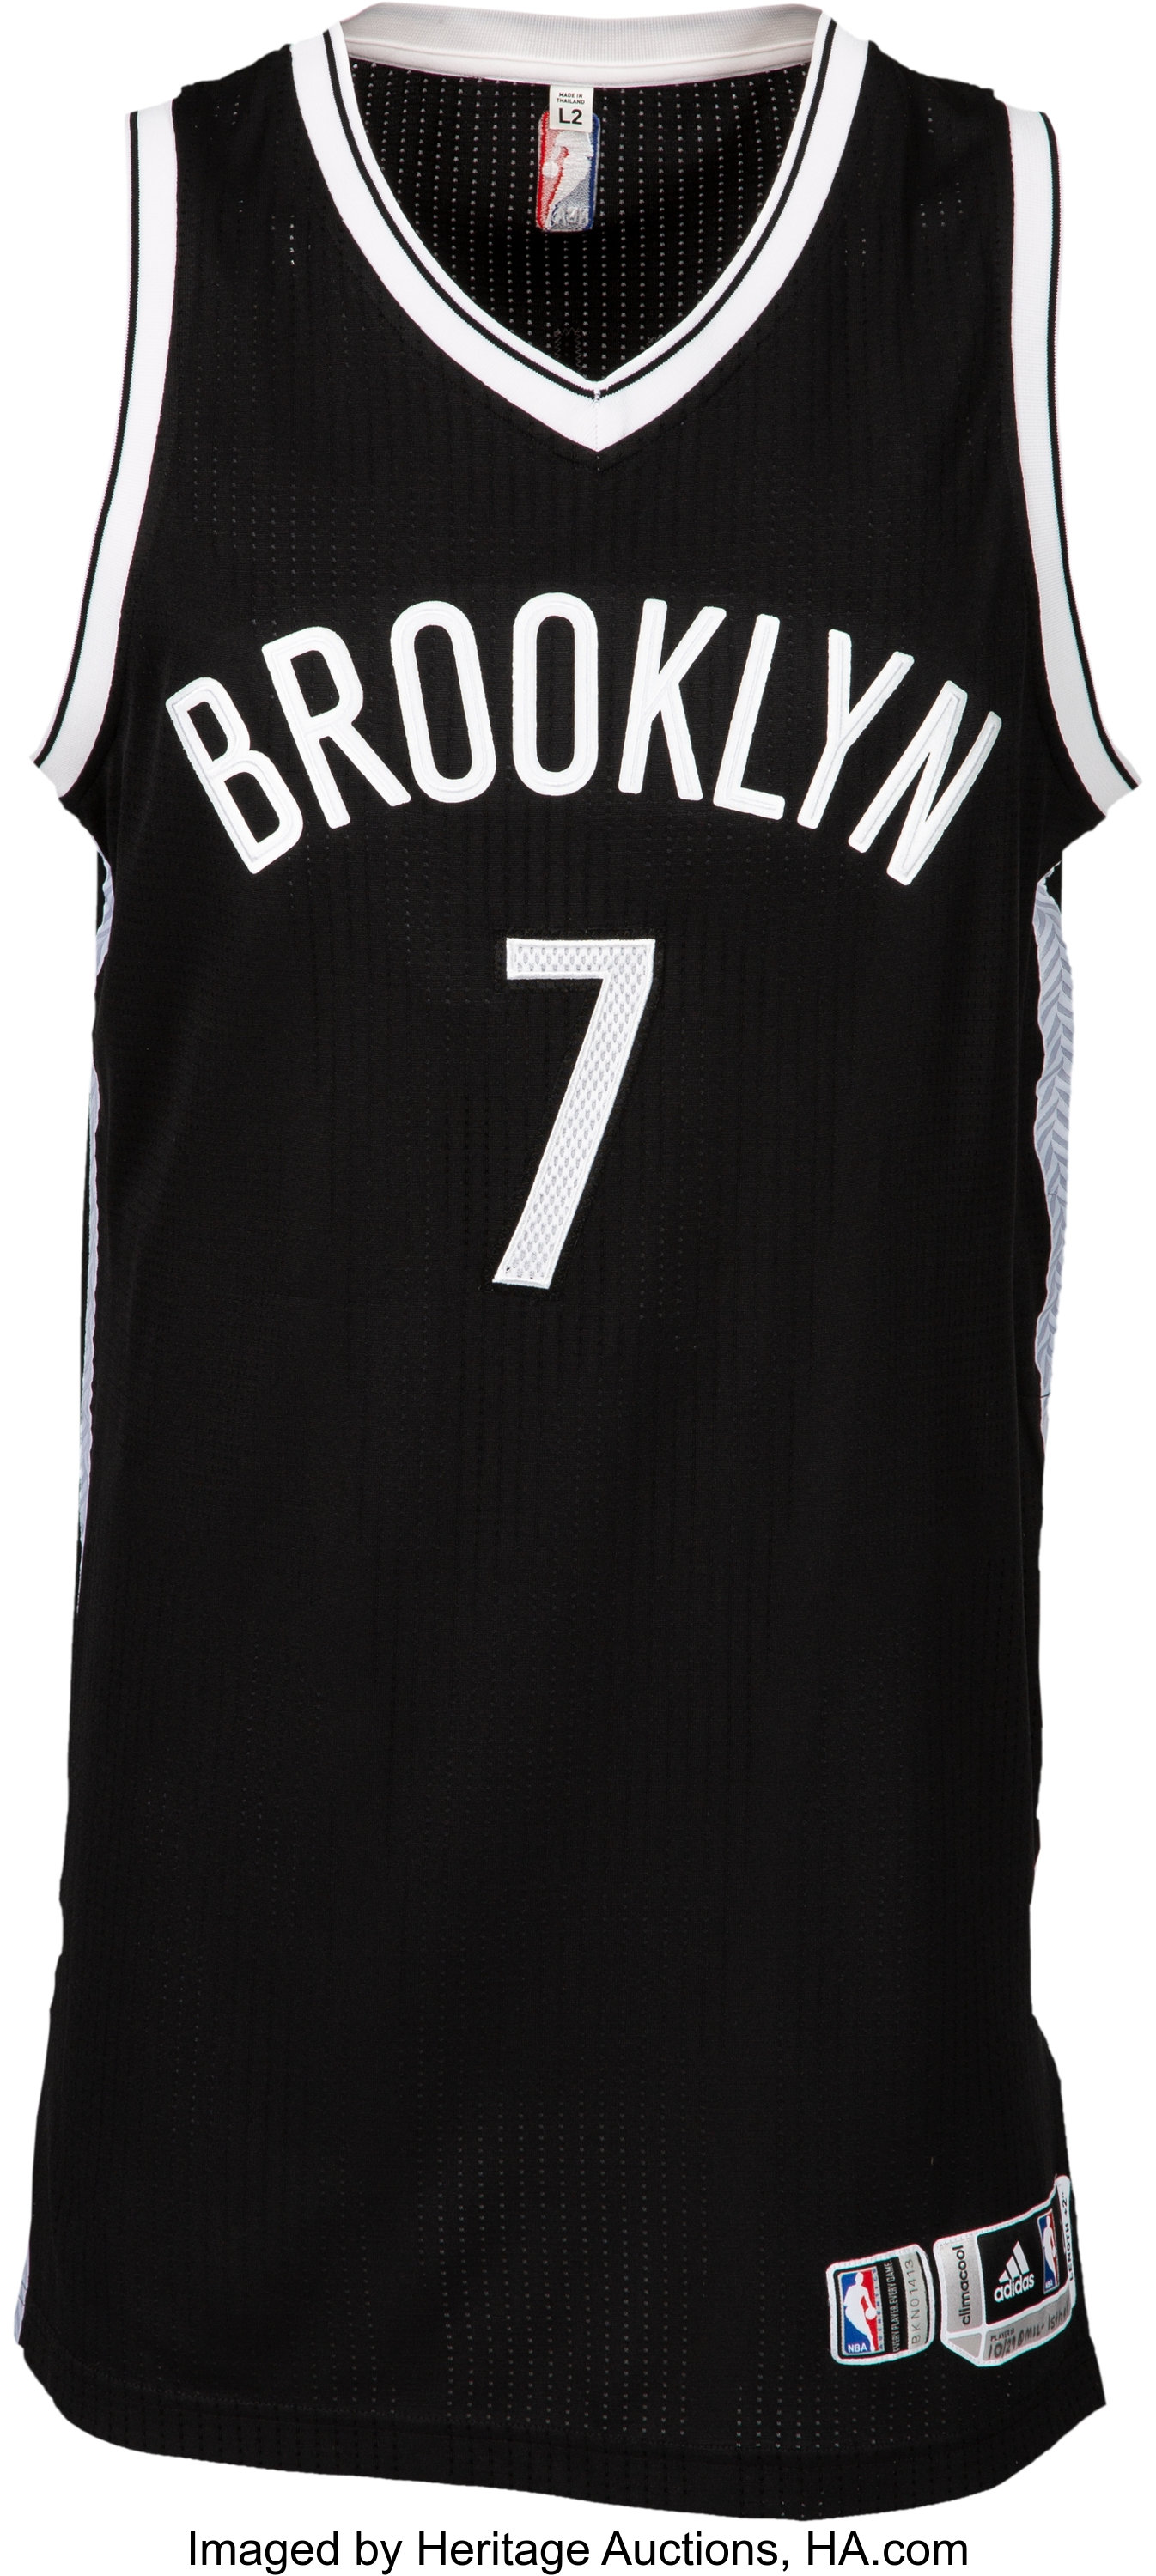 2016-17 Jeremy Lin Game Worn Brooklyn Nets Jersey - Used 10/29 vs